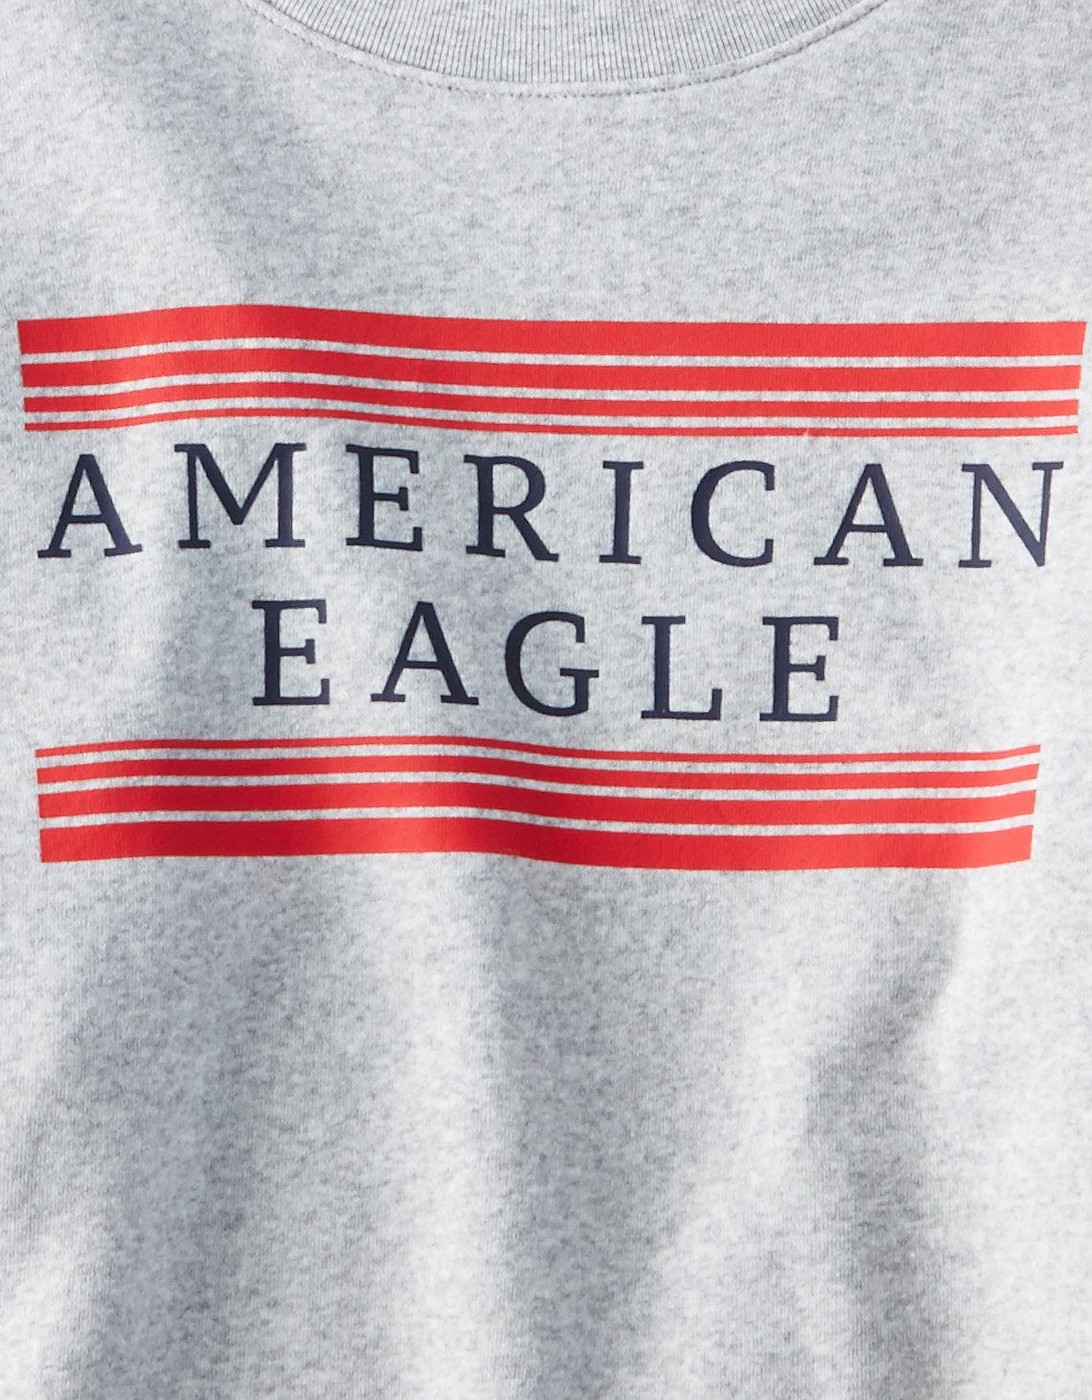 Свитшот женский - свитшот American Eagle